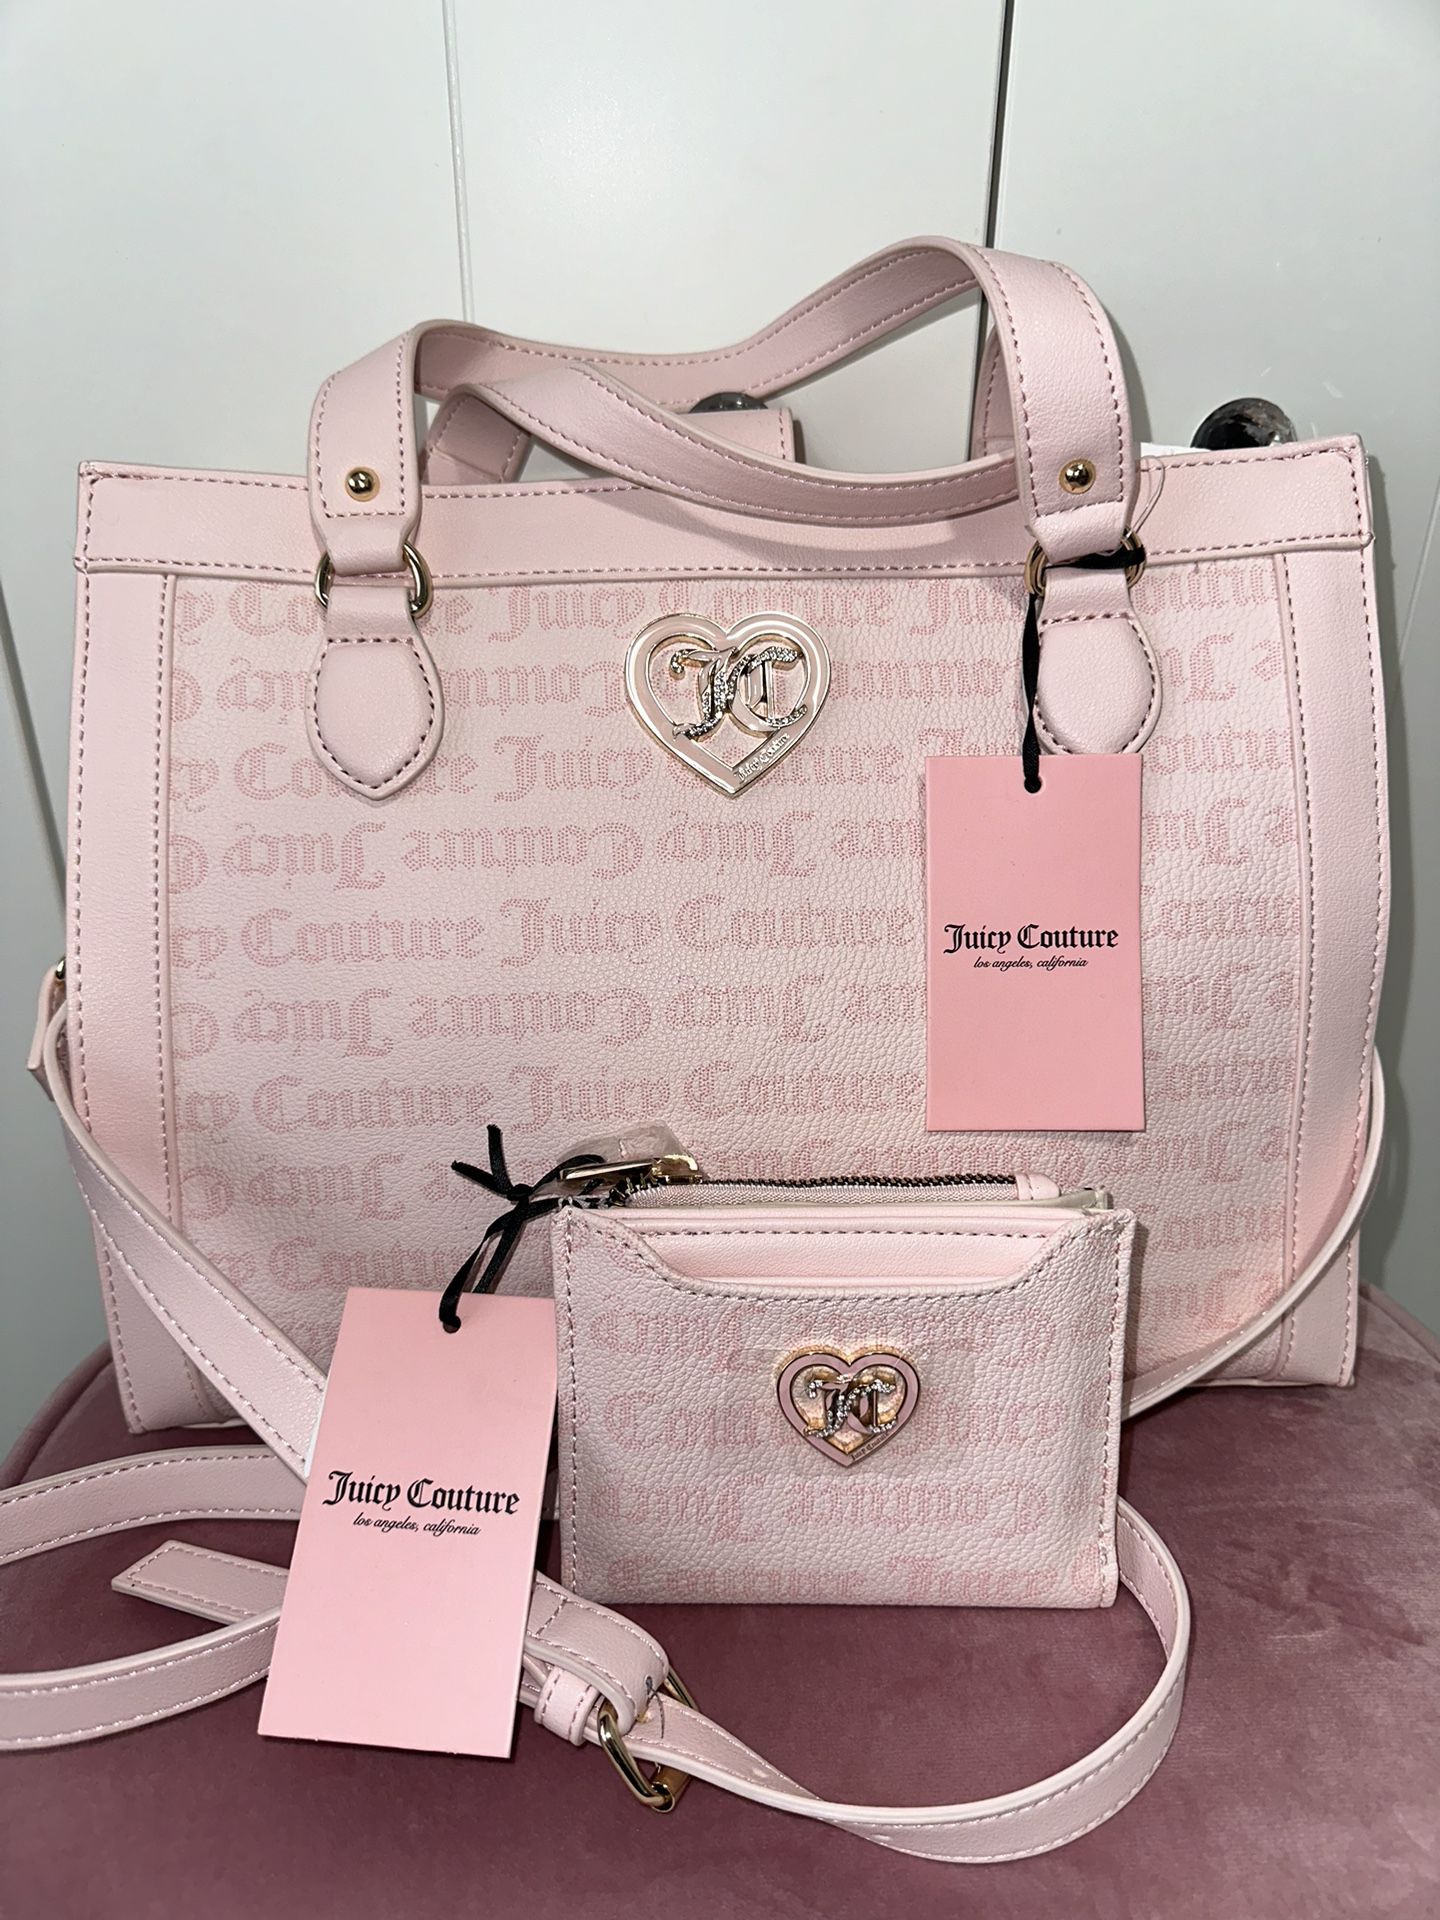 Juicy Couture Bag & Wallet 💗